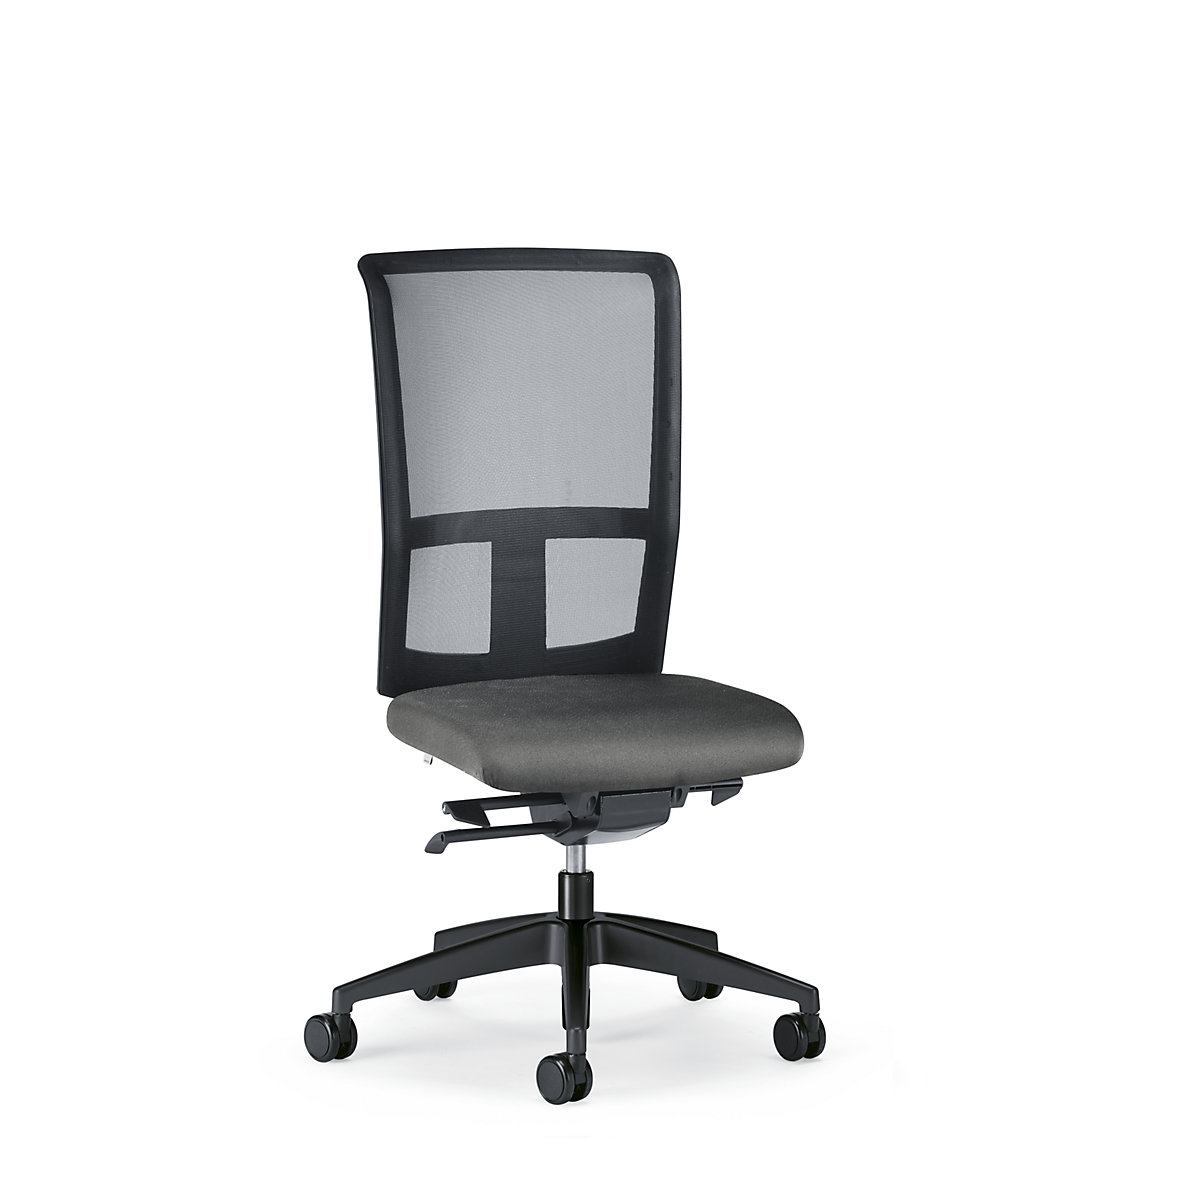 GOAL AIR office swivel chair, back rest height 545 mm – interstuhl, black frame, with hard castors, iron grey, seat depth 410 mm-7